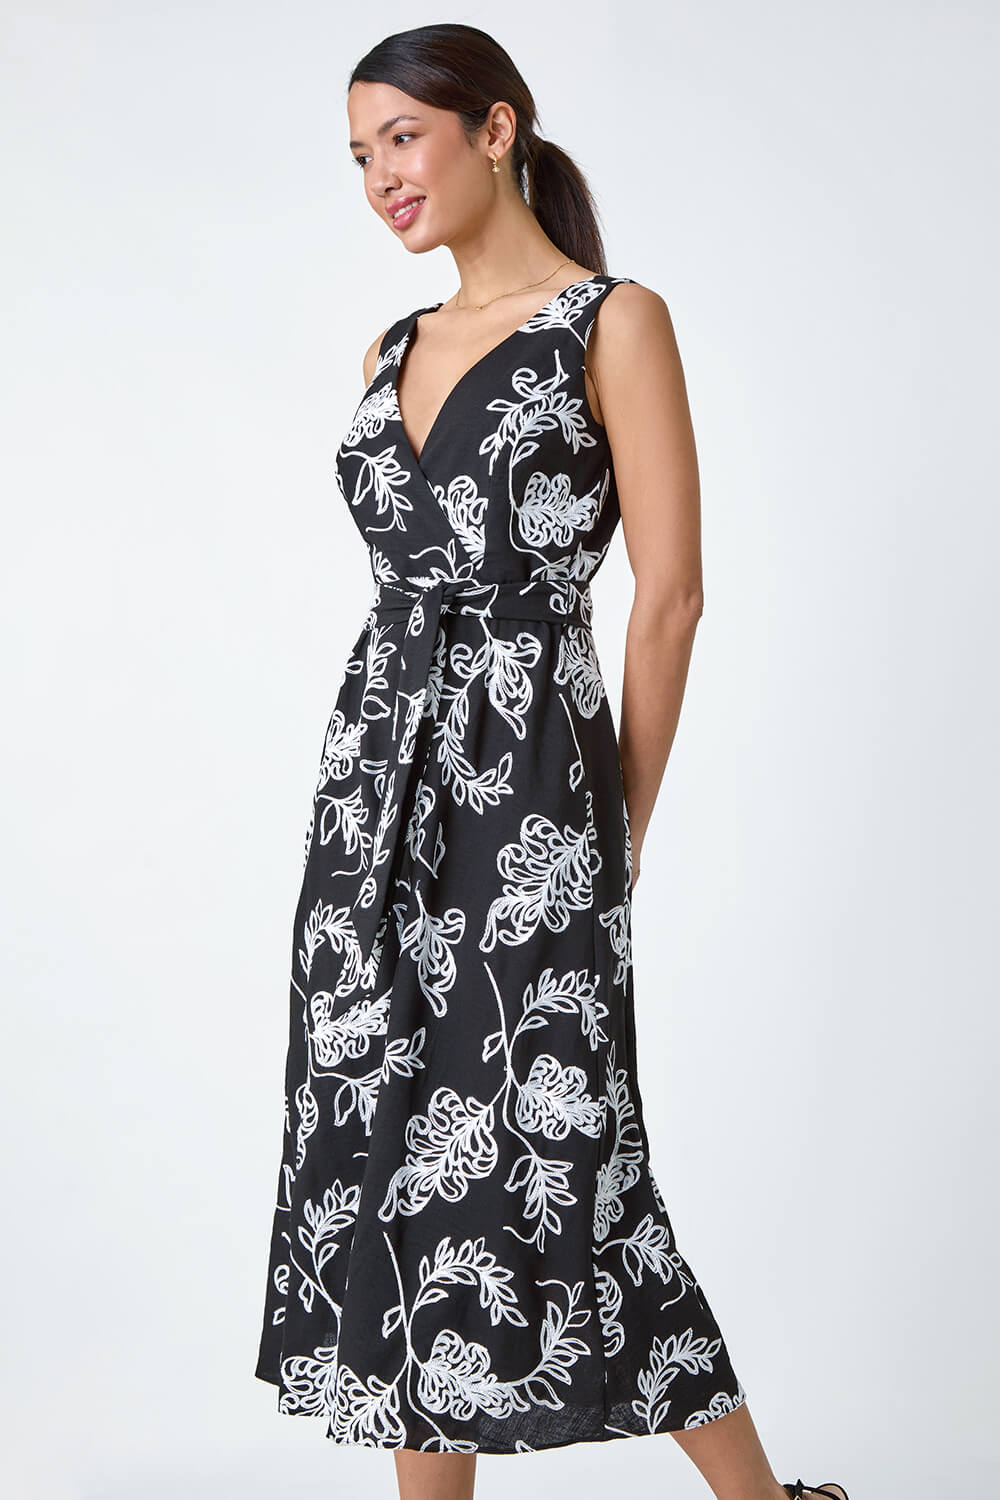 Black Floral Embroidered Cotton Blend Dress, Image 4 of 5